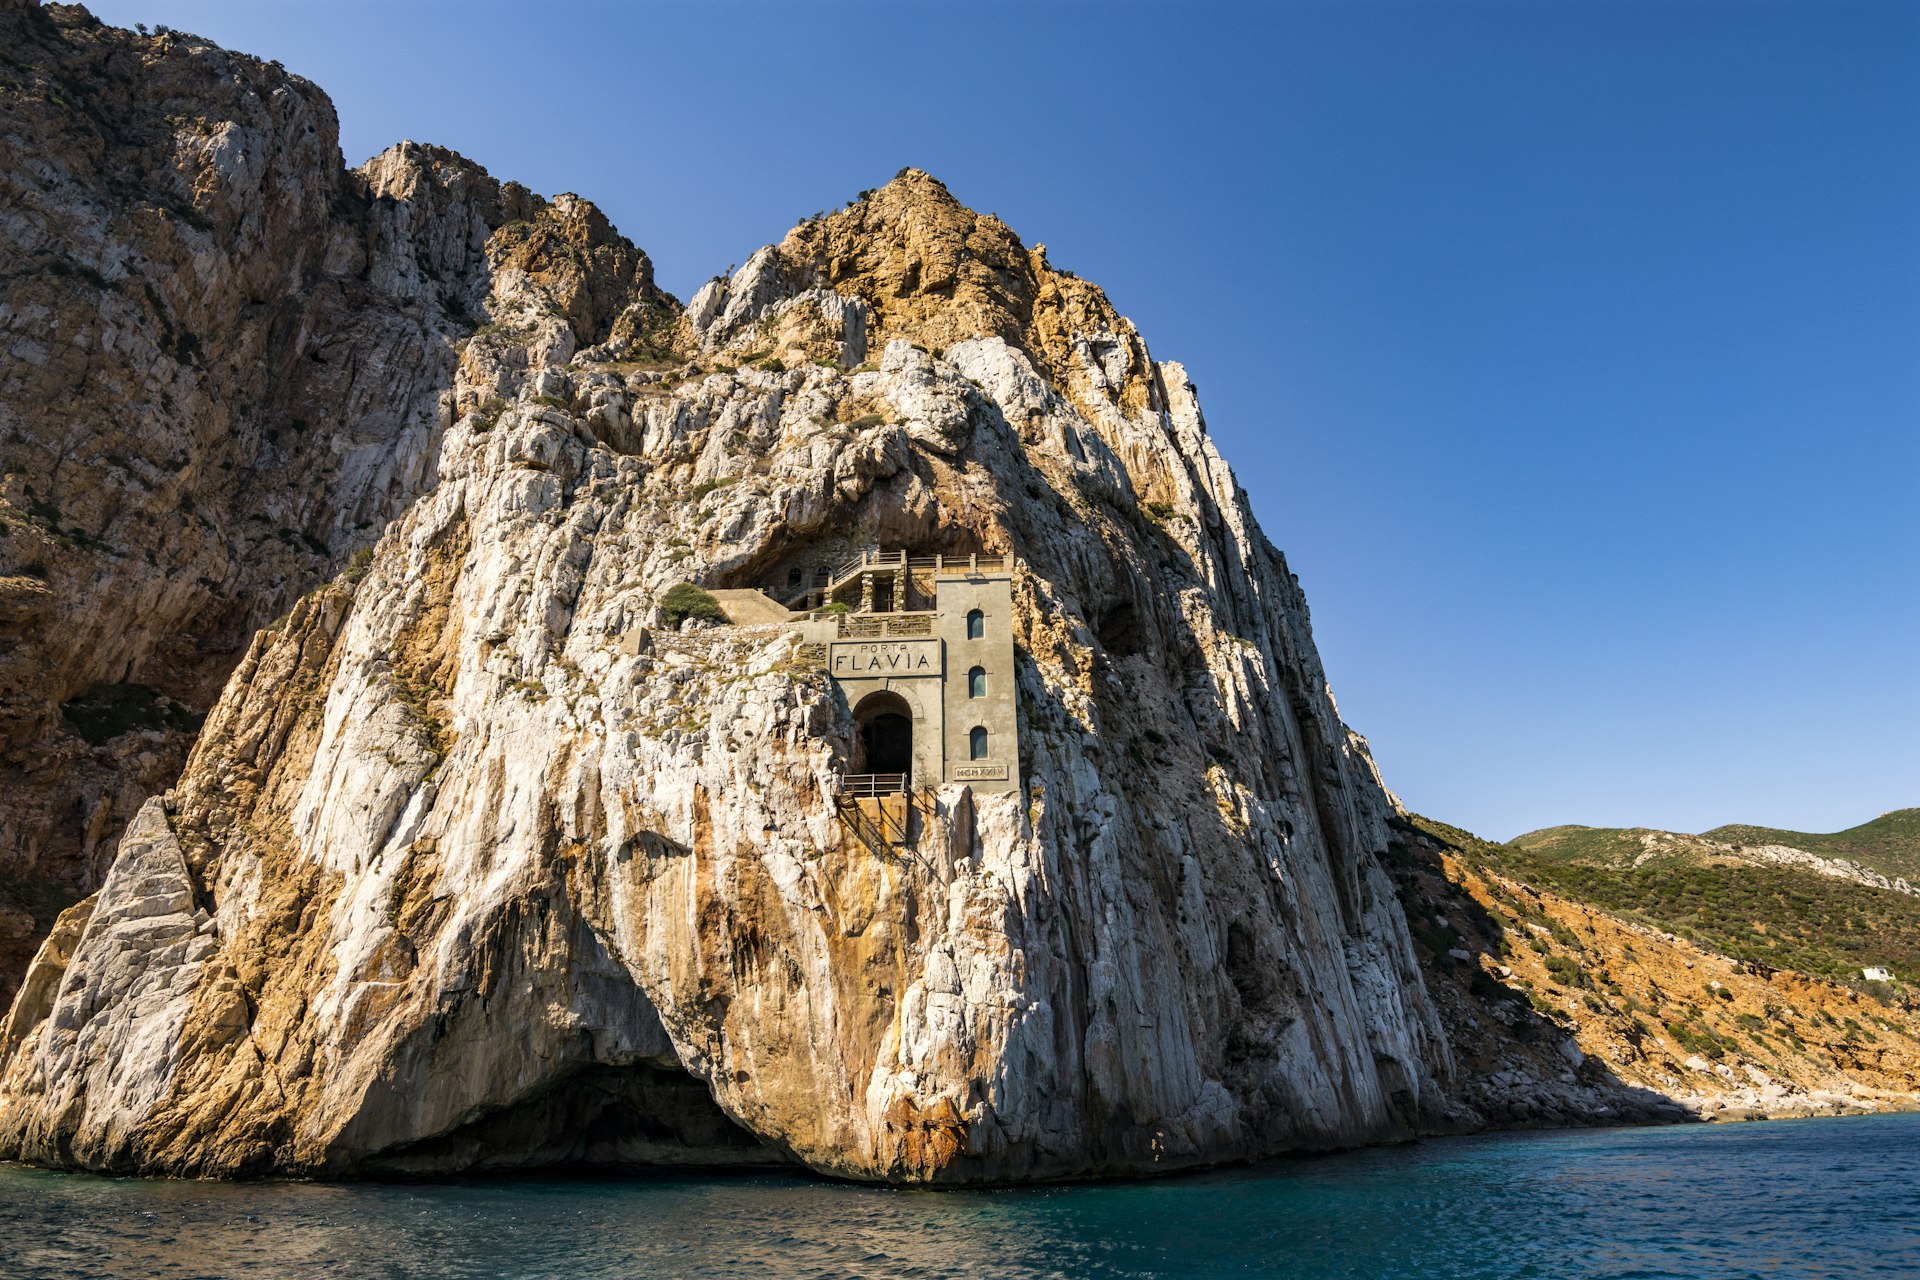 A mine entrance built into a sea cliff